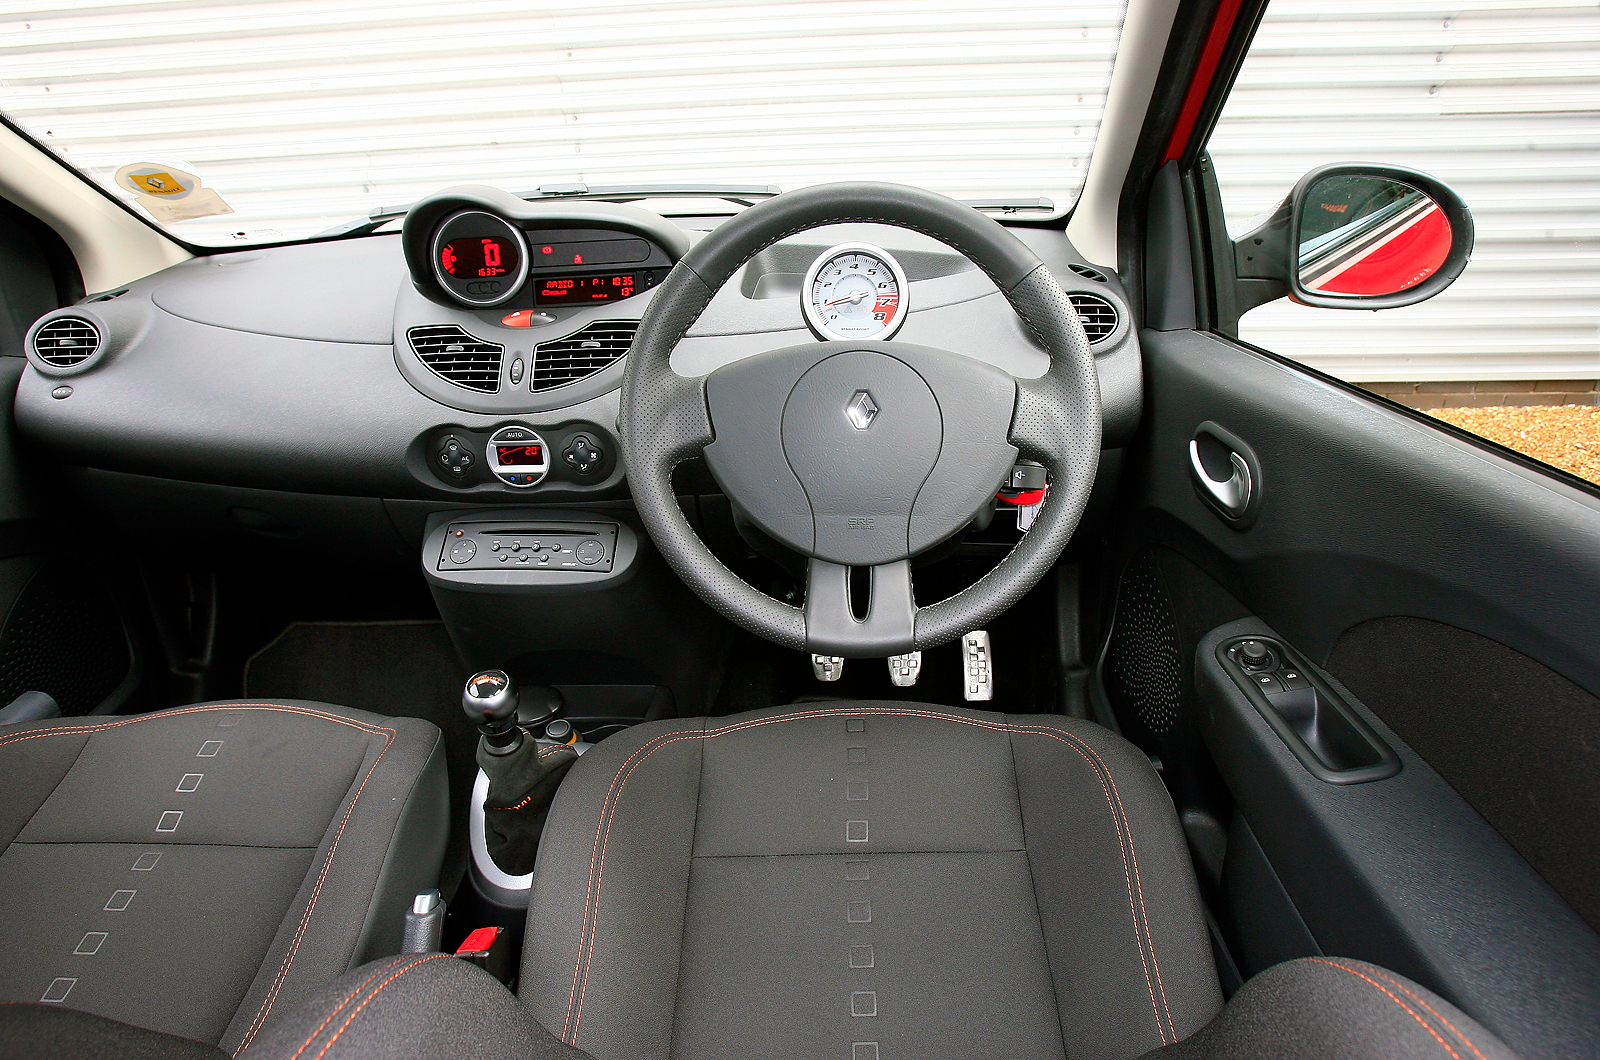 Renault Twingo RS133 dashboard